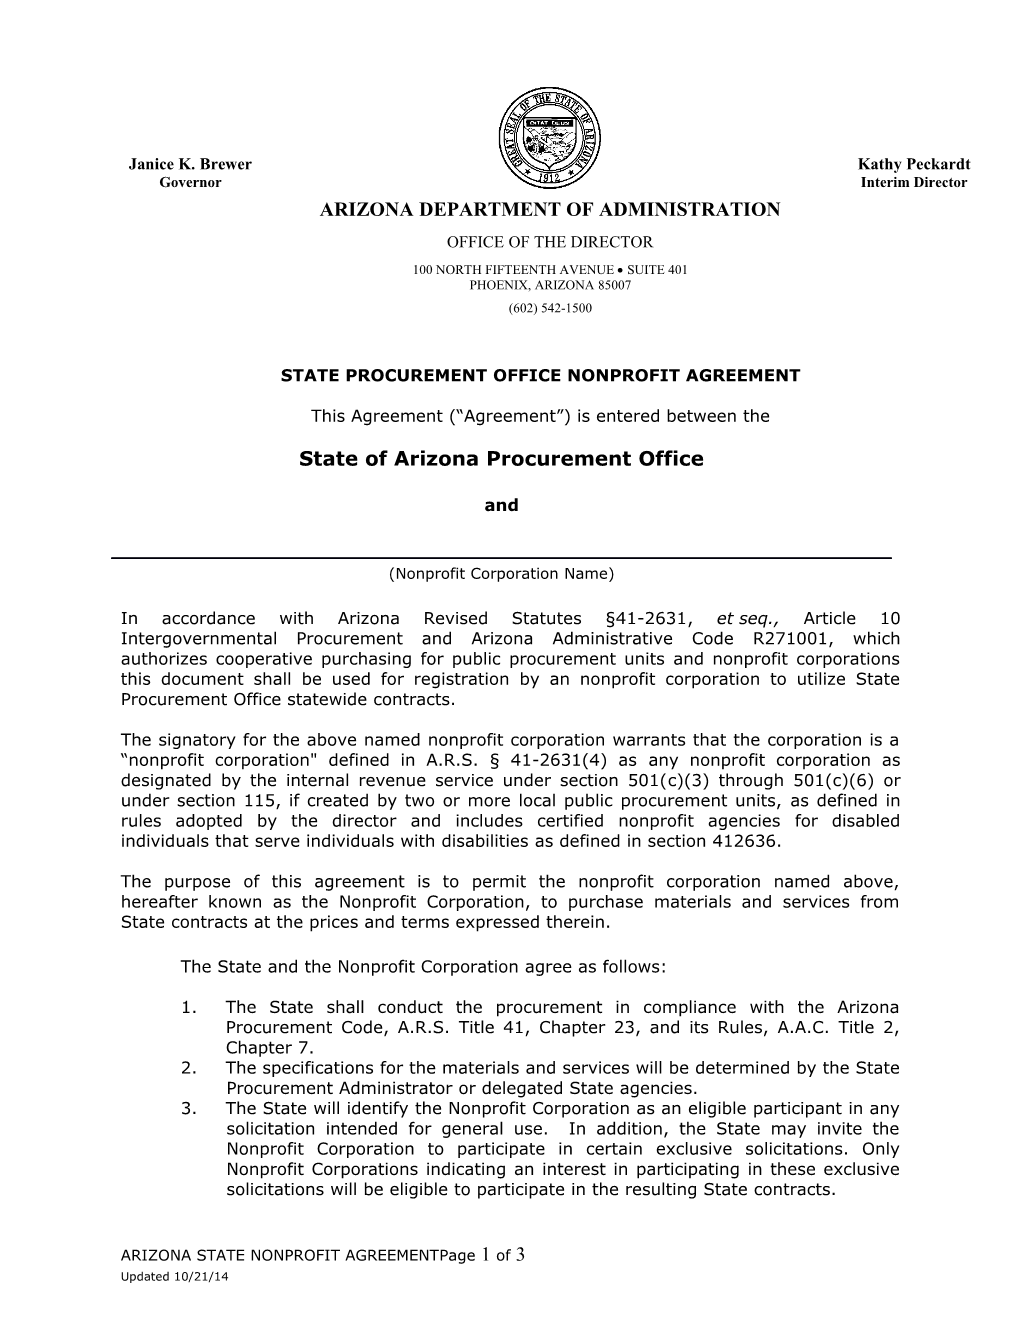 State Procurement Office Nonprofit Agreement